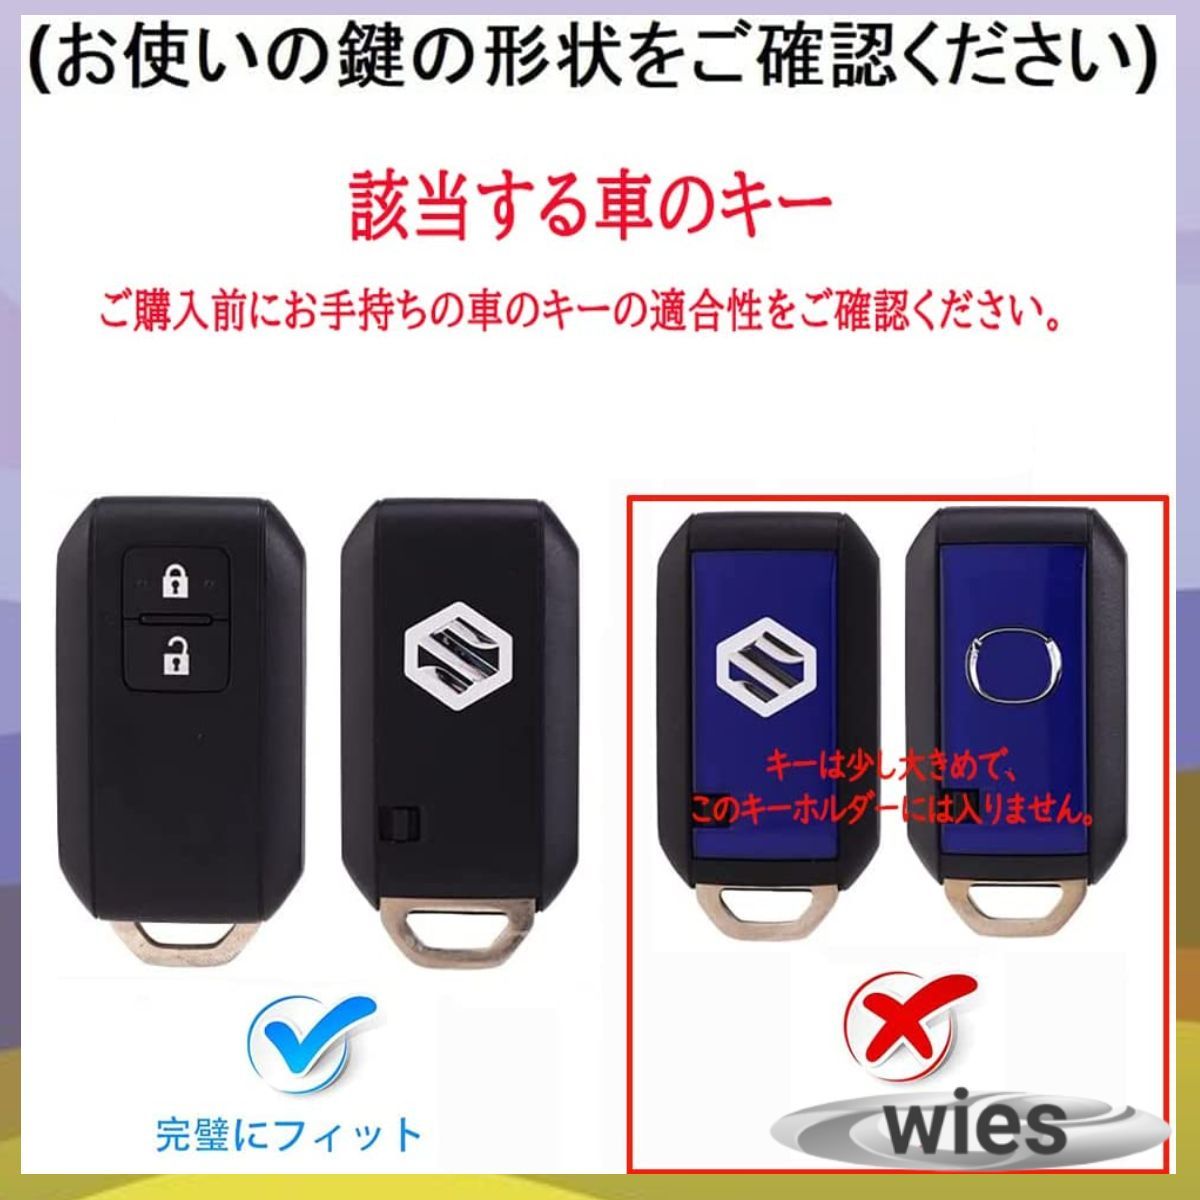 ... safety SUZUKI Suzuki Wagon R Swift Jimny Hustler smart key case key holder Brown leather original leather stylish high class car 